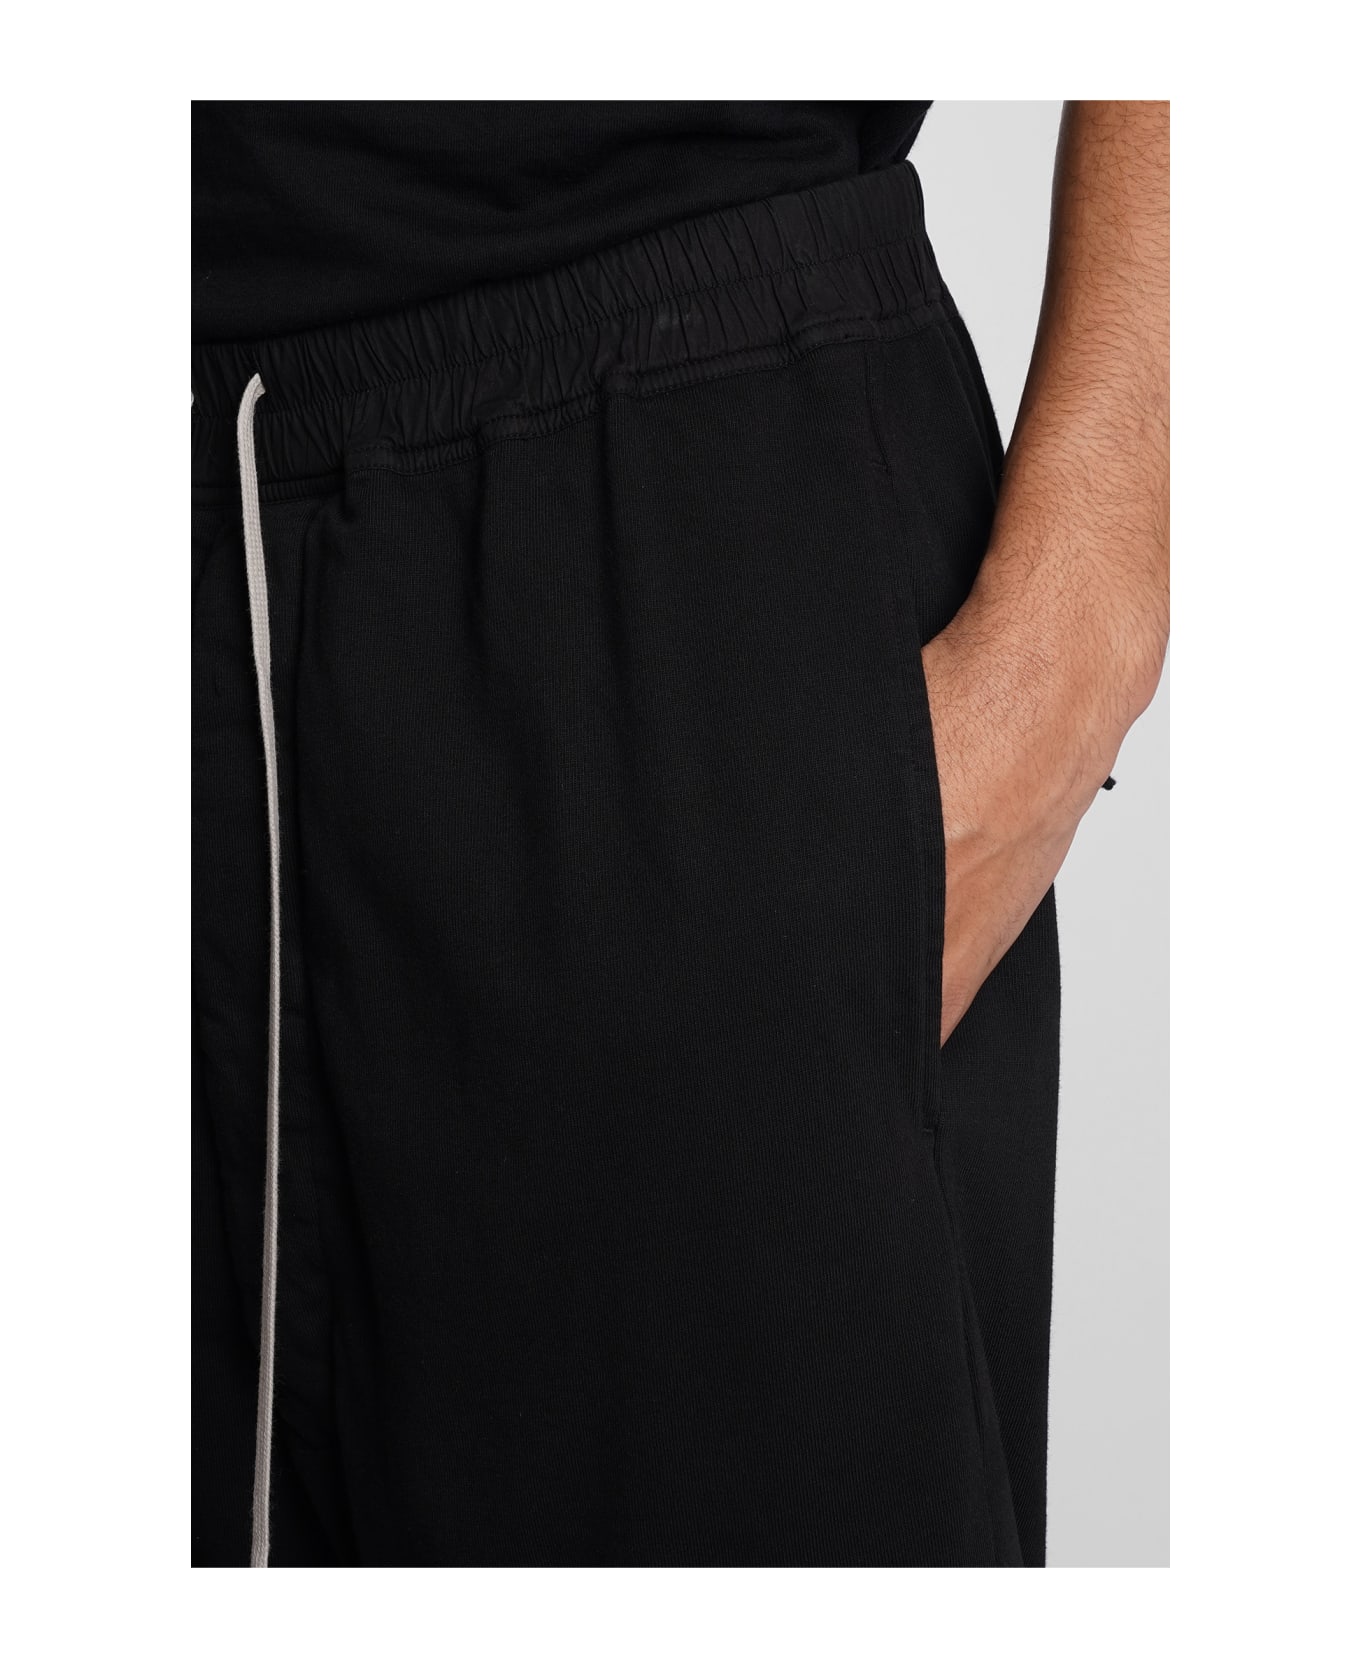 DRKSHDW Drawstring Bermuda Shorts - Black ショートパンツ